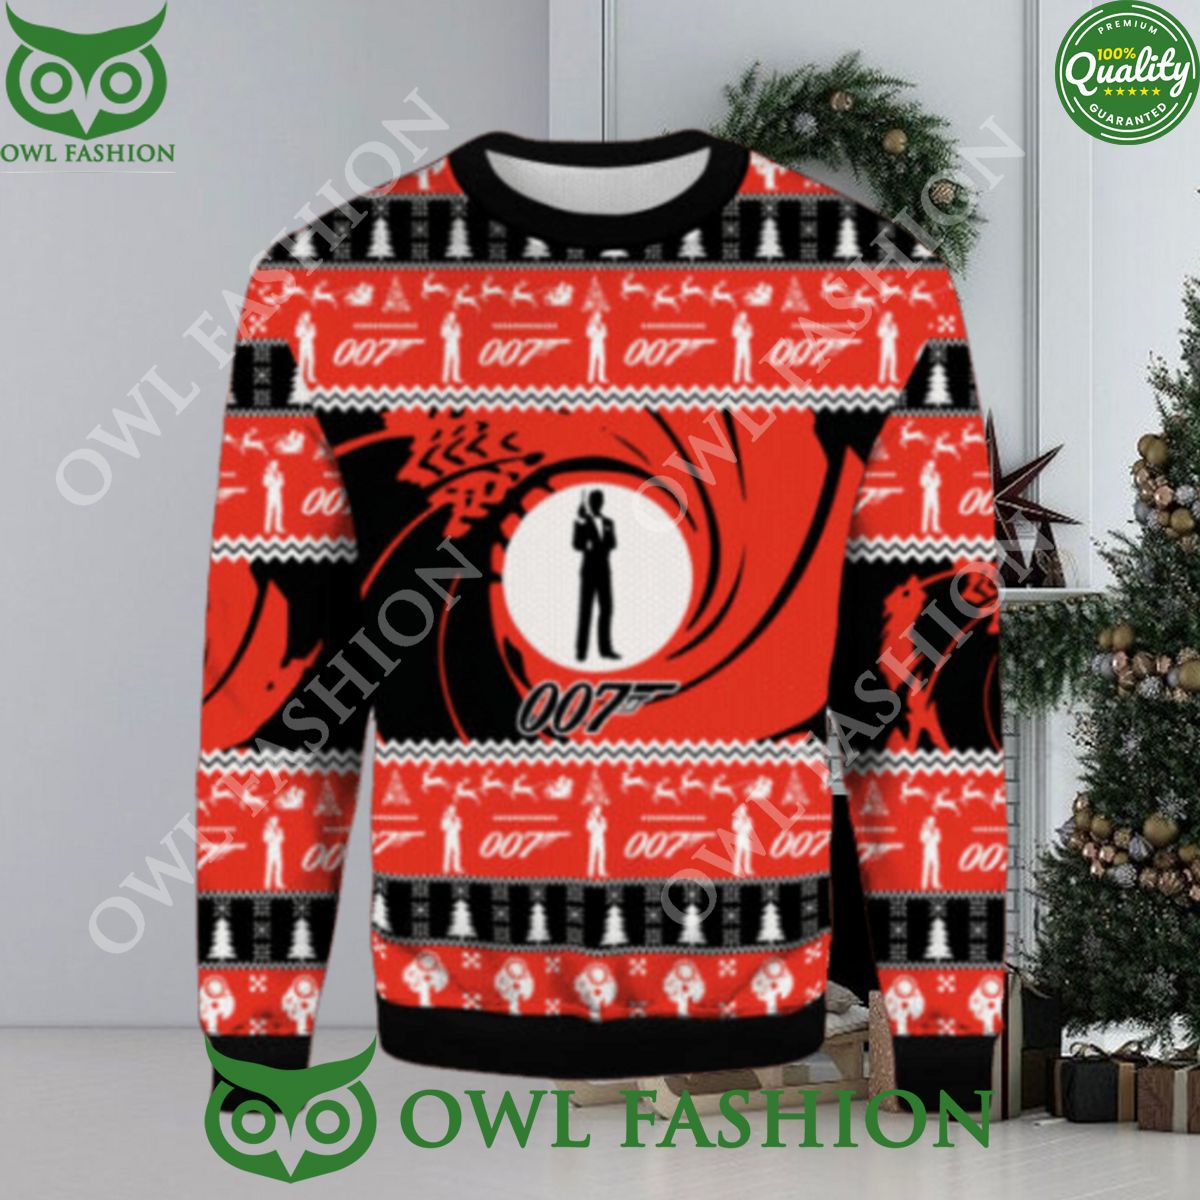 007 detective christmas sweater 1 RerQh.jpg